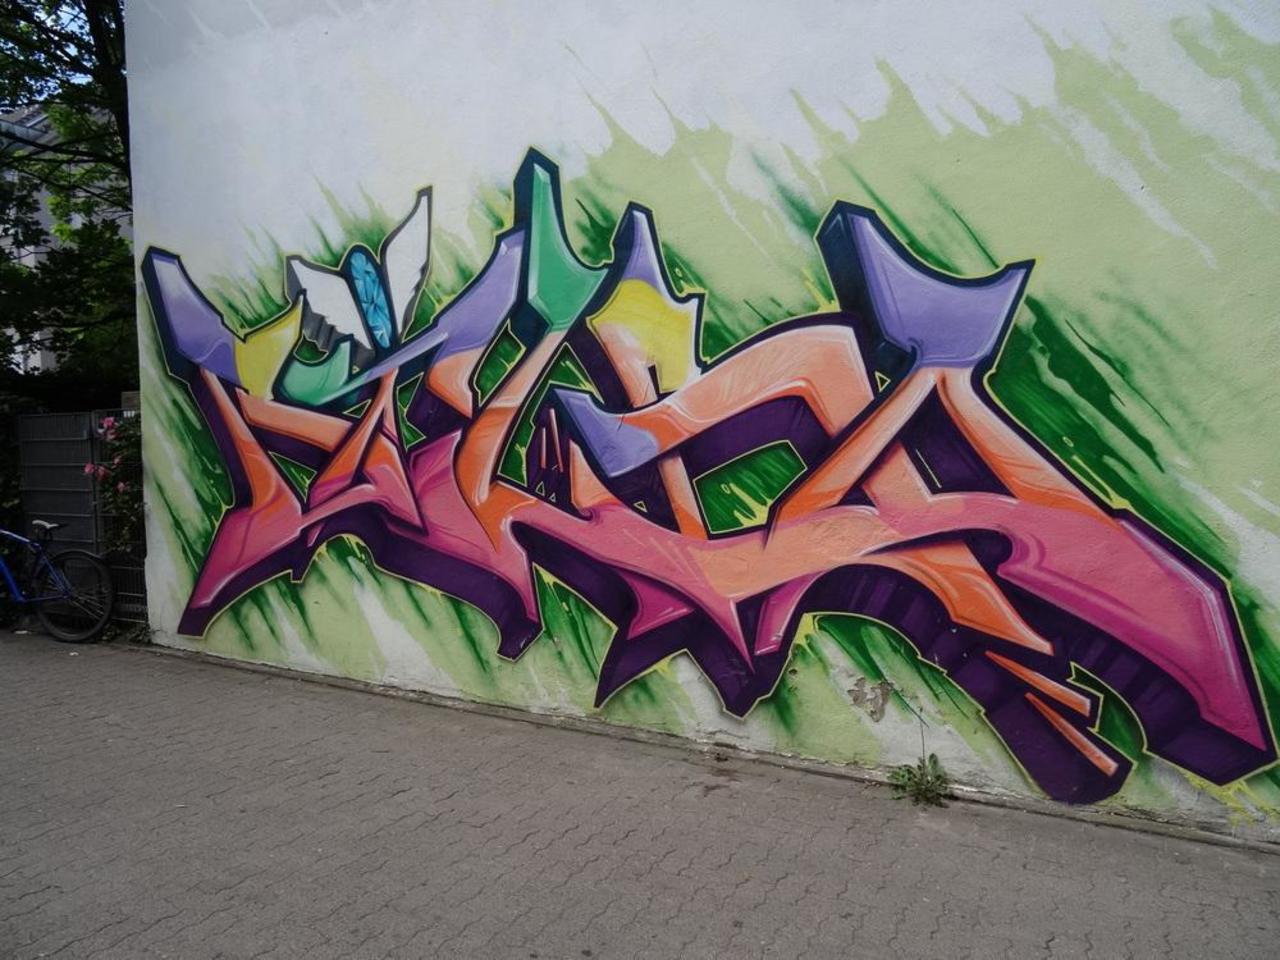 Graffiti Karlsruhe, Germany
#streetart #art #urbanart #graffiti #karlsruhe http://t.co/pJlsU8B7wm